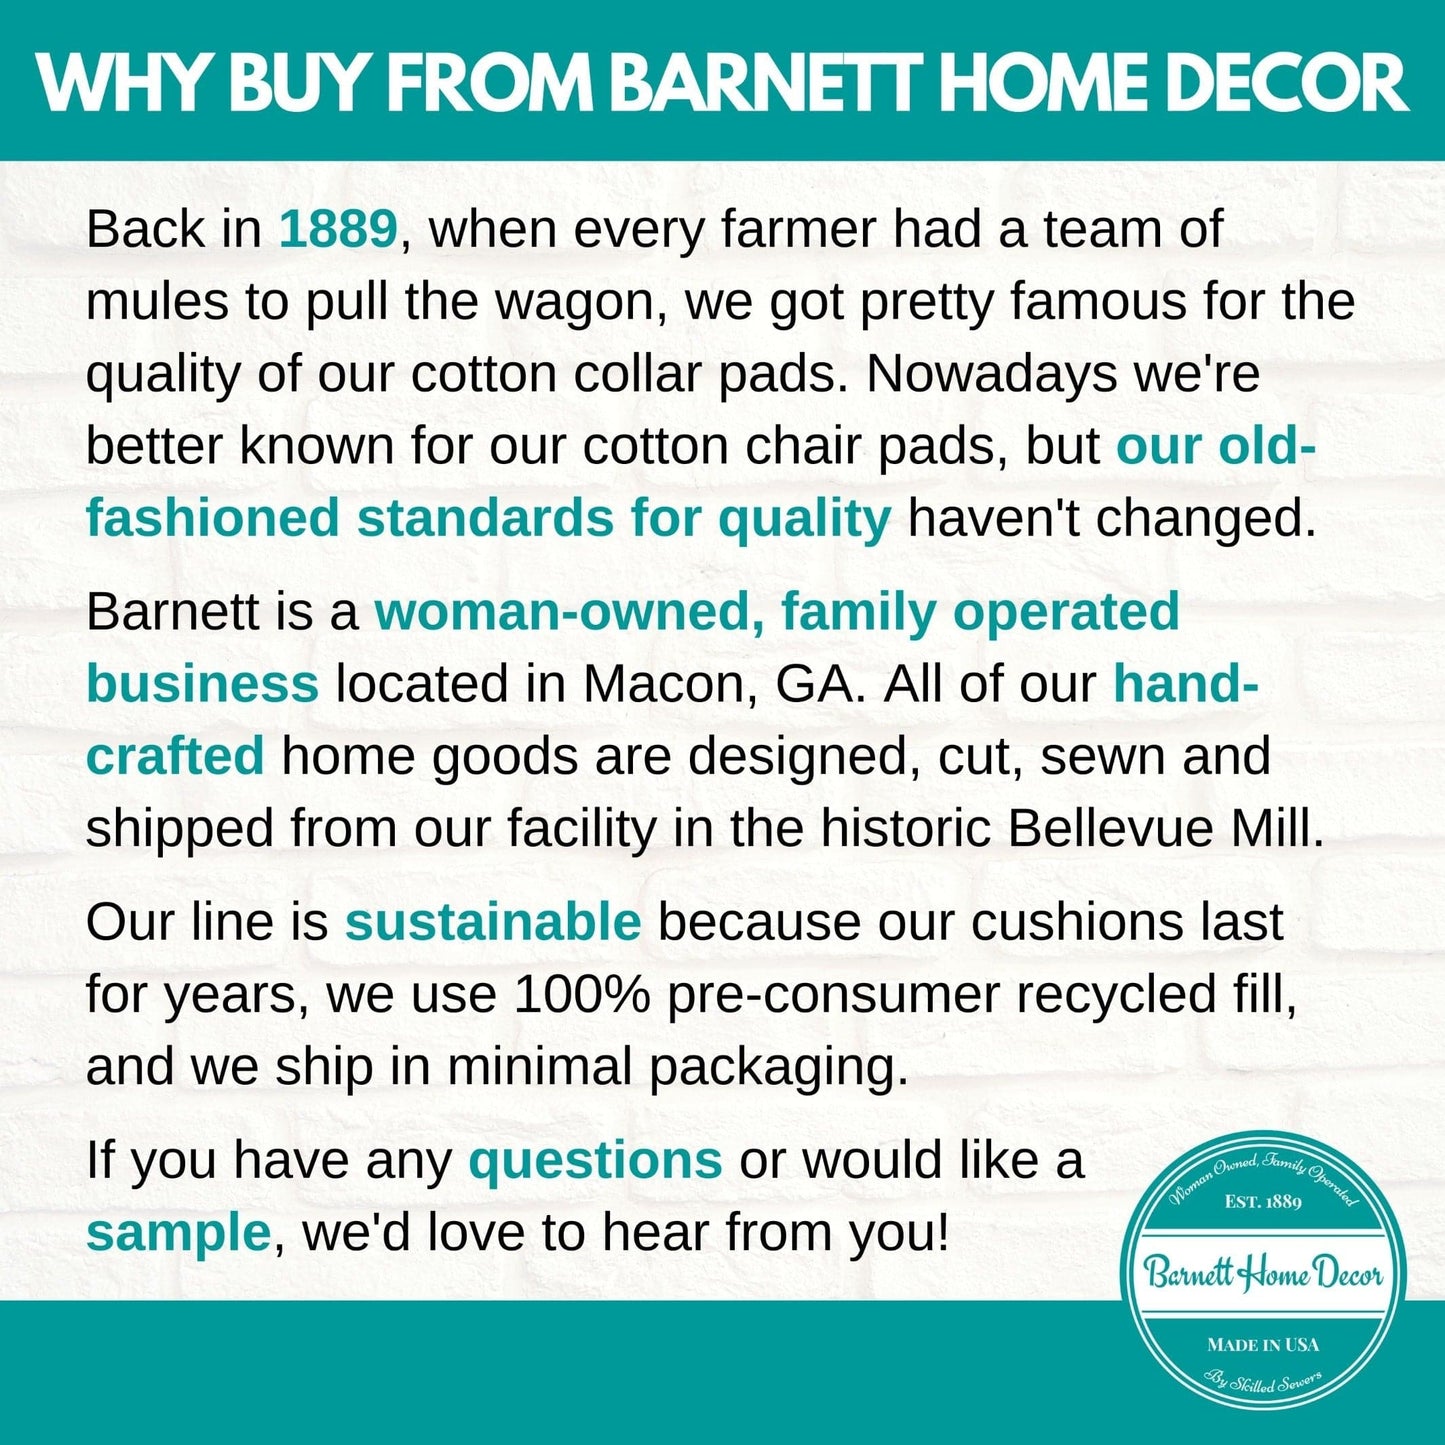 Barnett Home Decor - Why we use latex foam fill - Premium Comfort - Lasts Longer - Won't go Flat - 100% Upcycled